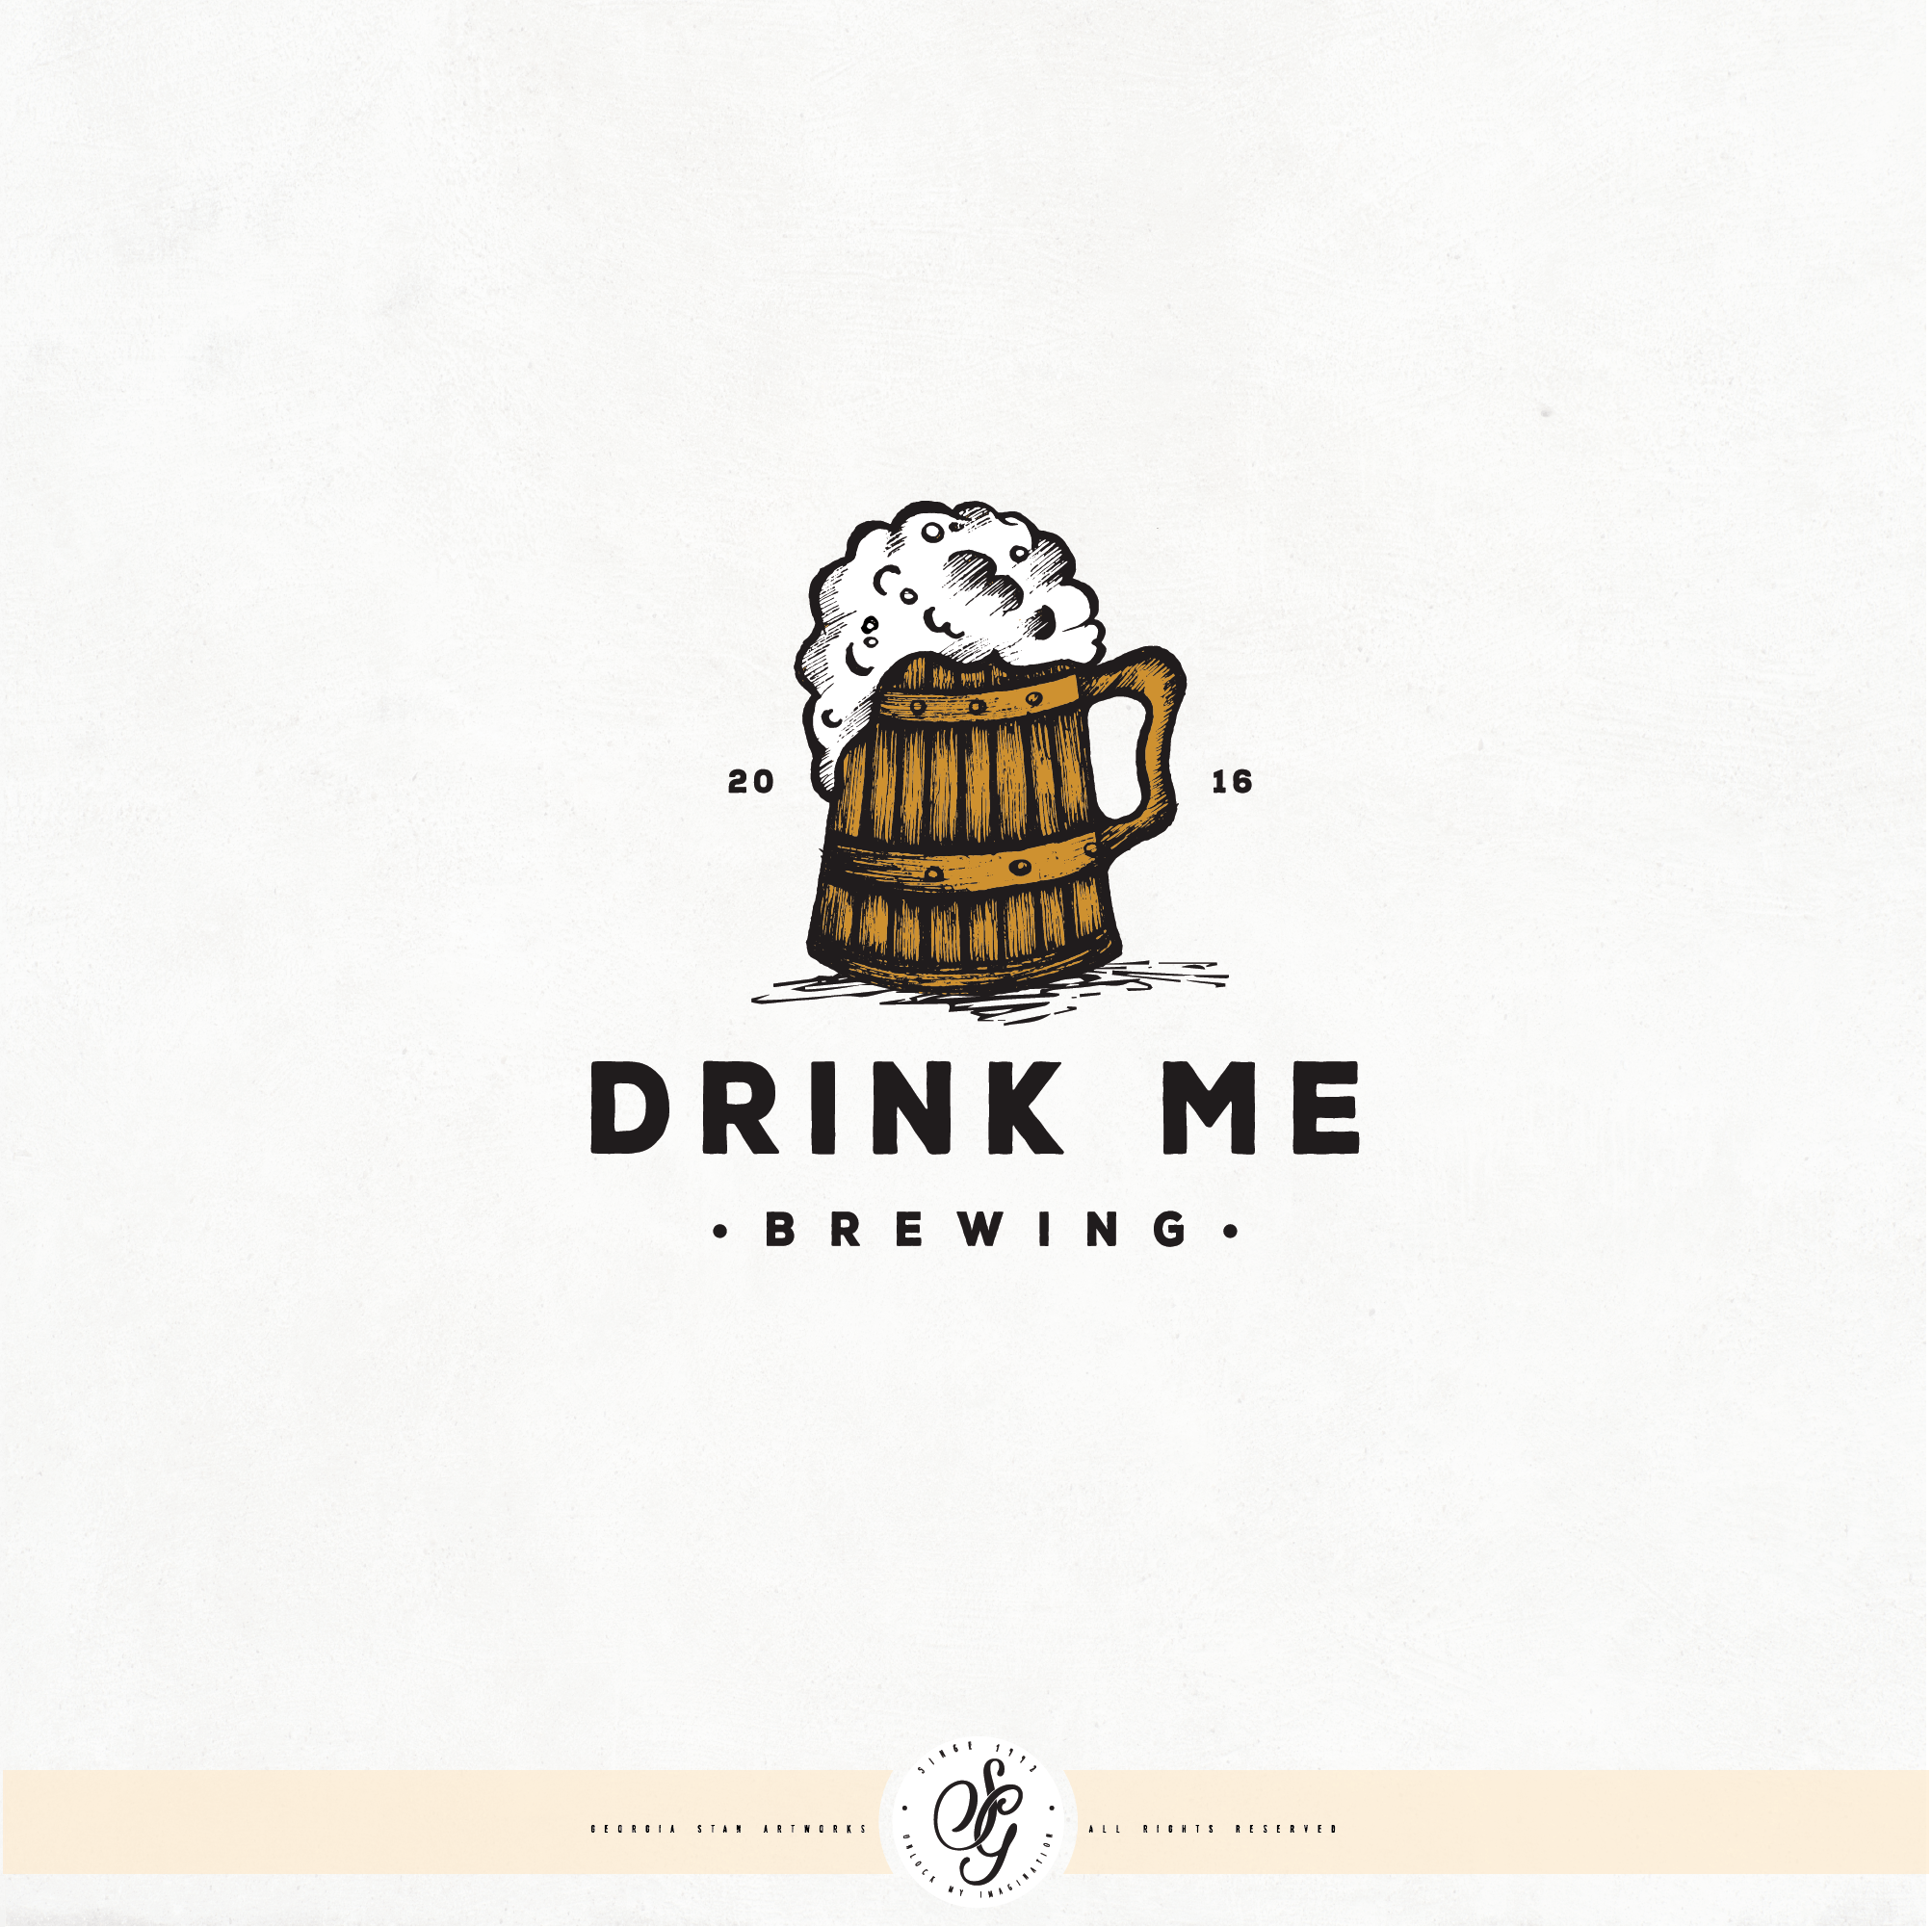 Georgia Beer Logo - Design #48 by Georgia Stan | Create a brewery logo for Drink Me ...